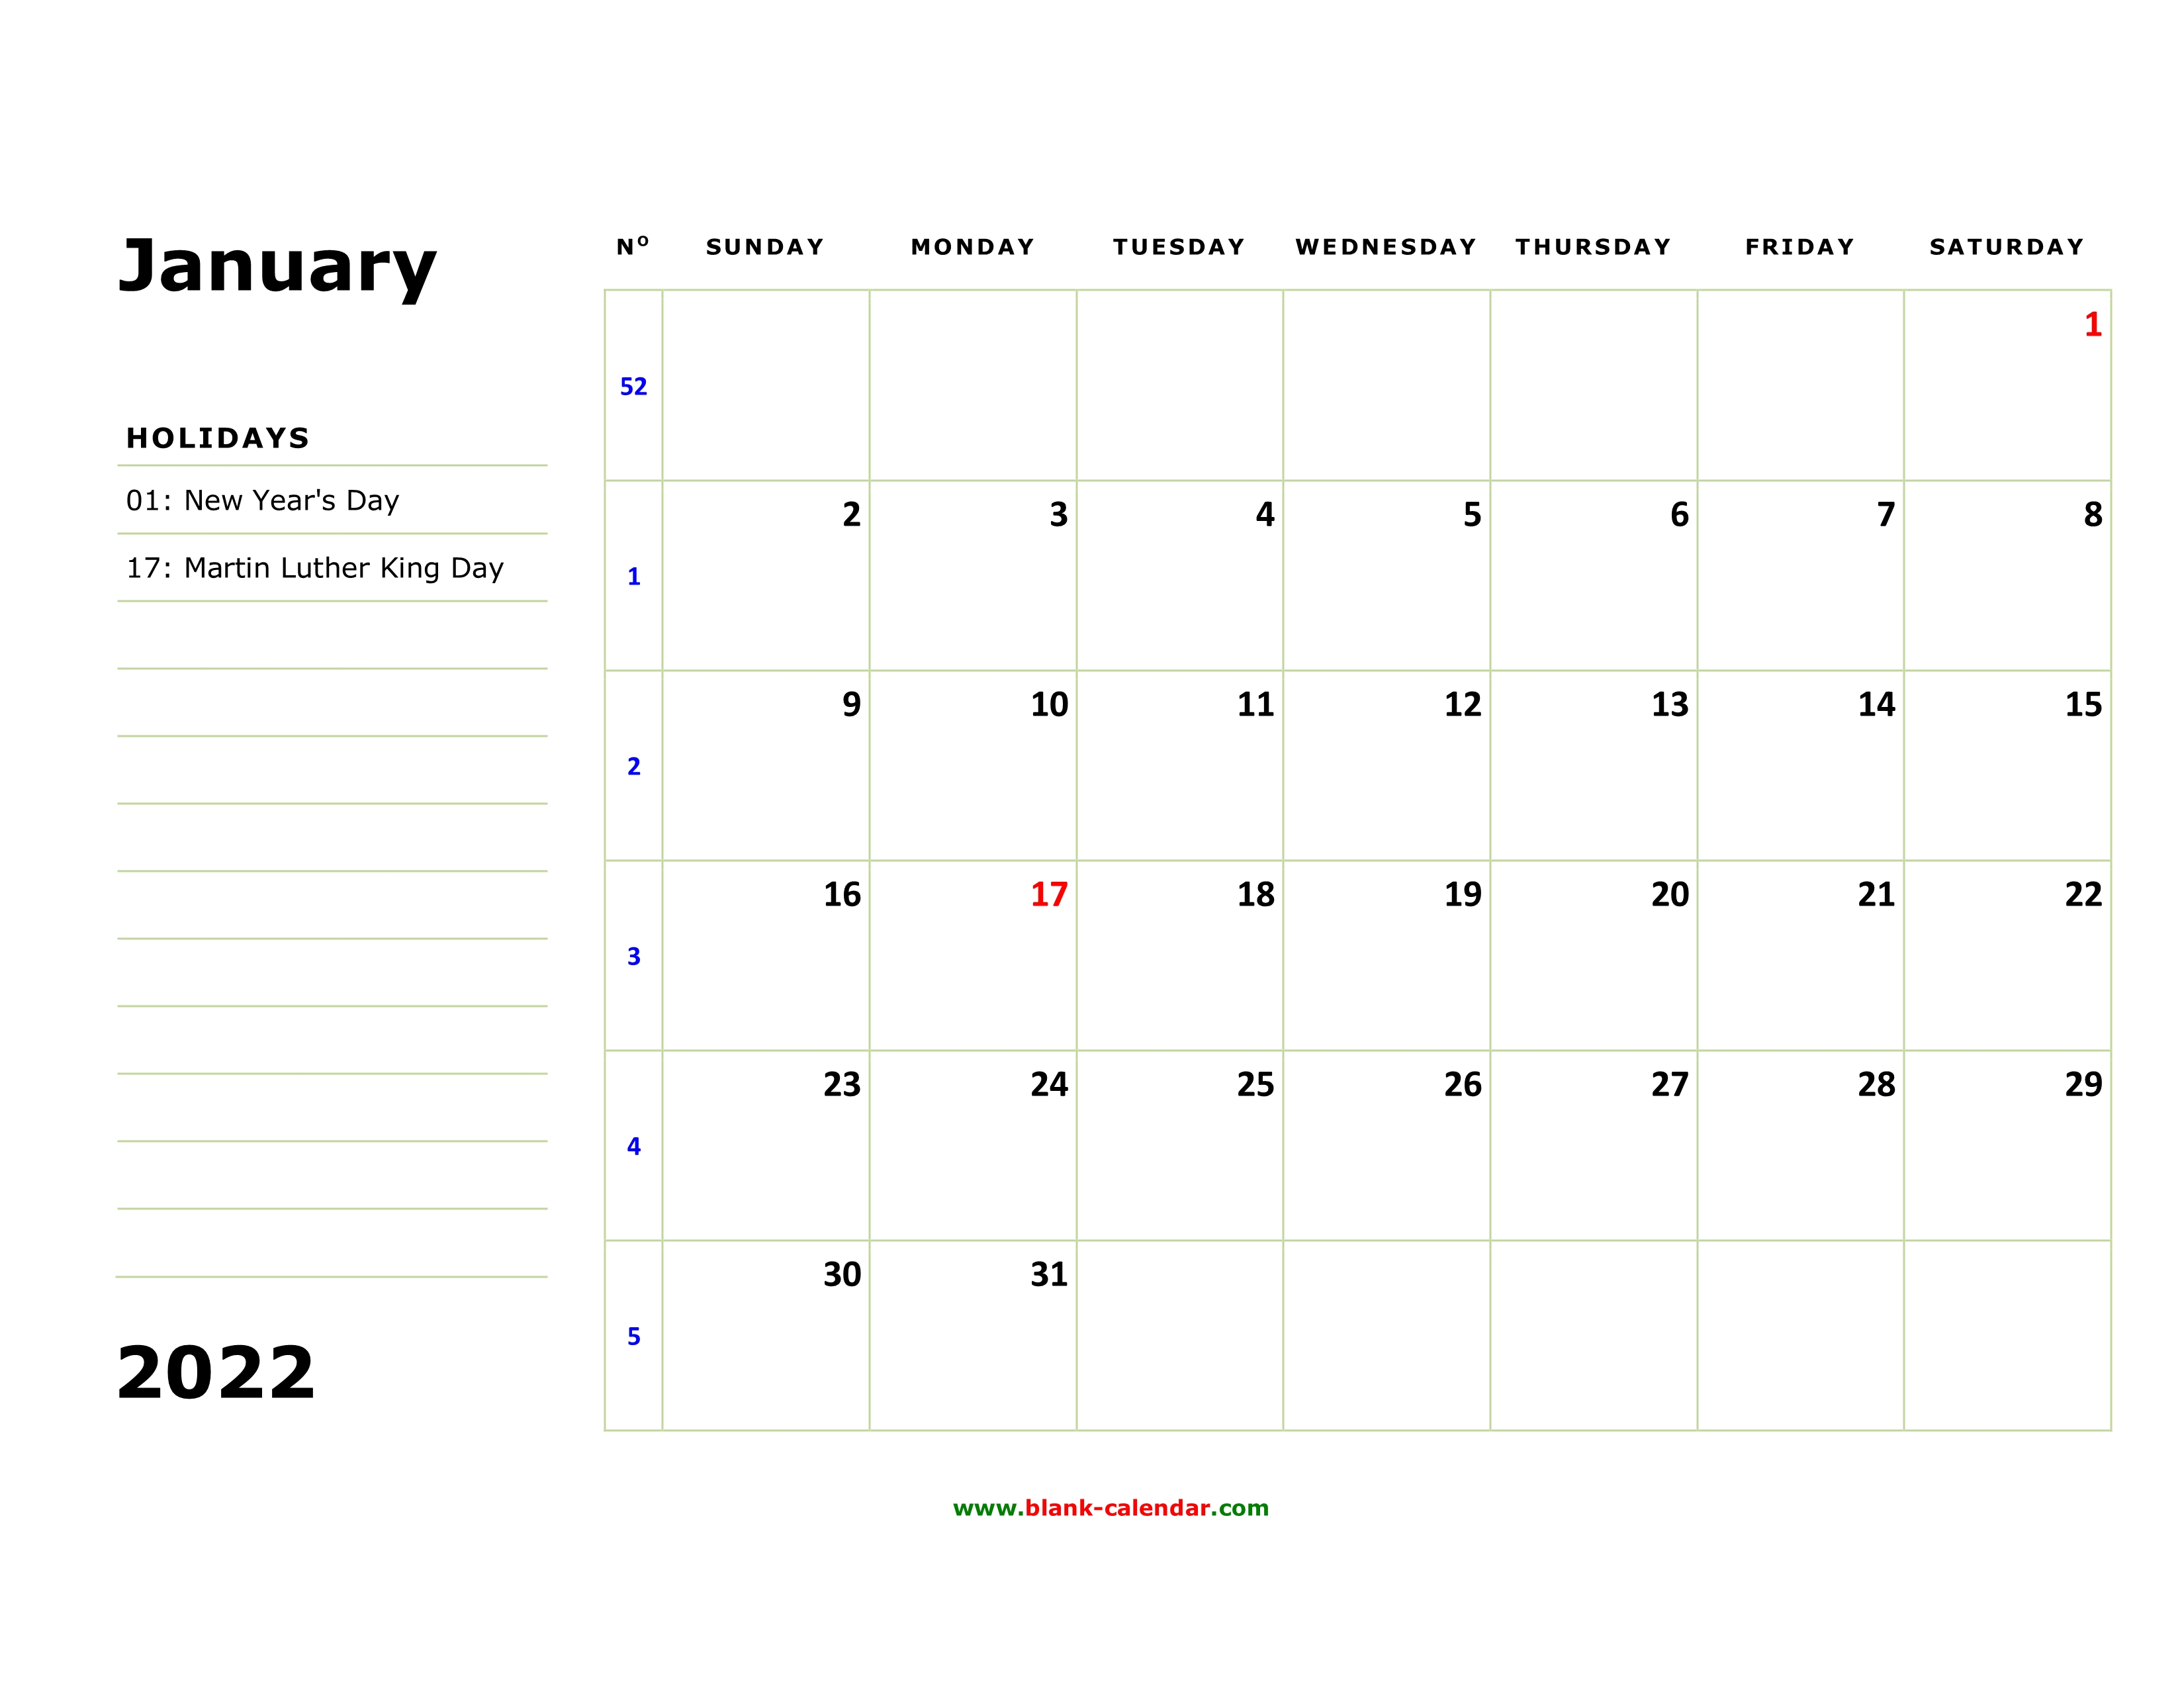 2022 Large Grid Calendar Calendar With Holidays Images